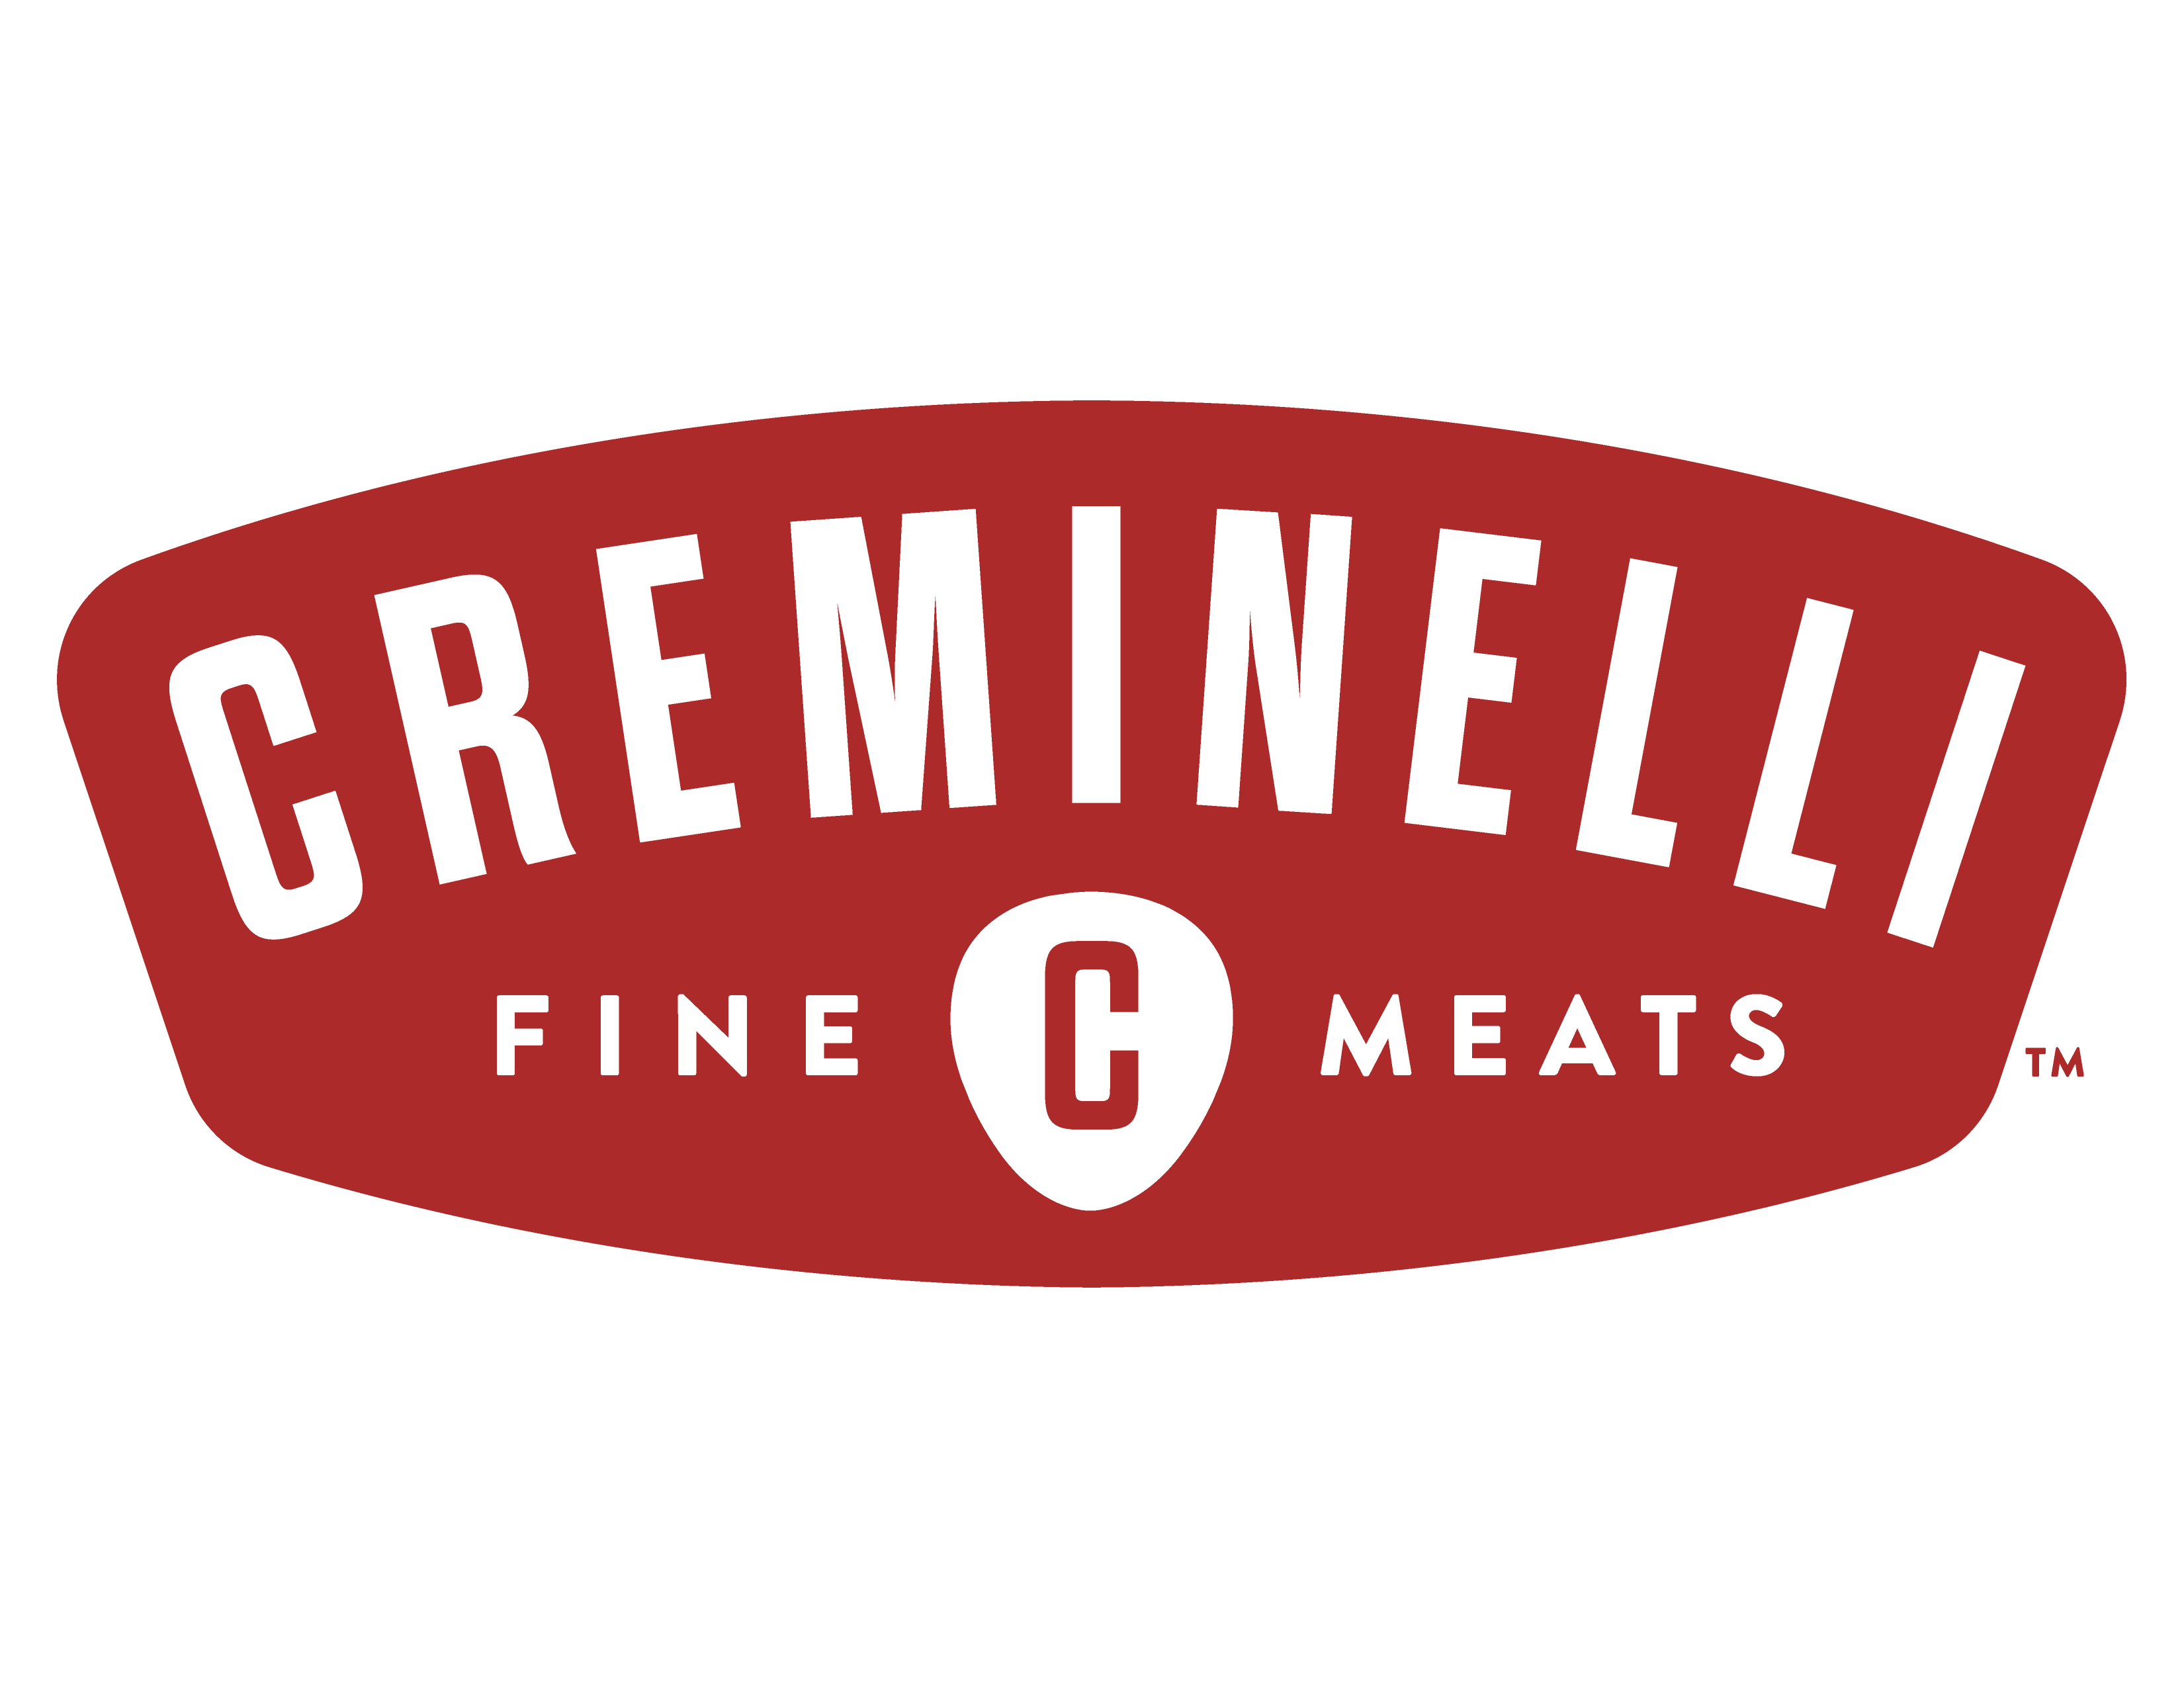 Creminelli Fine Meats"